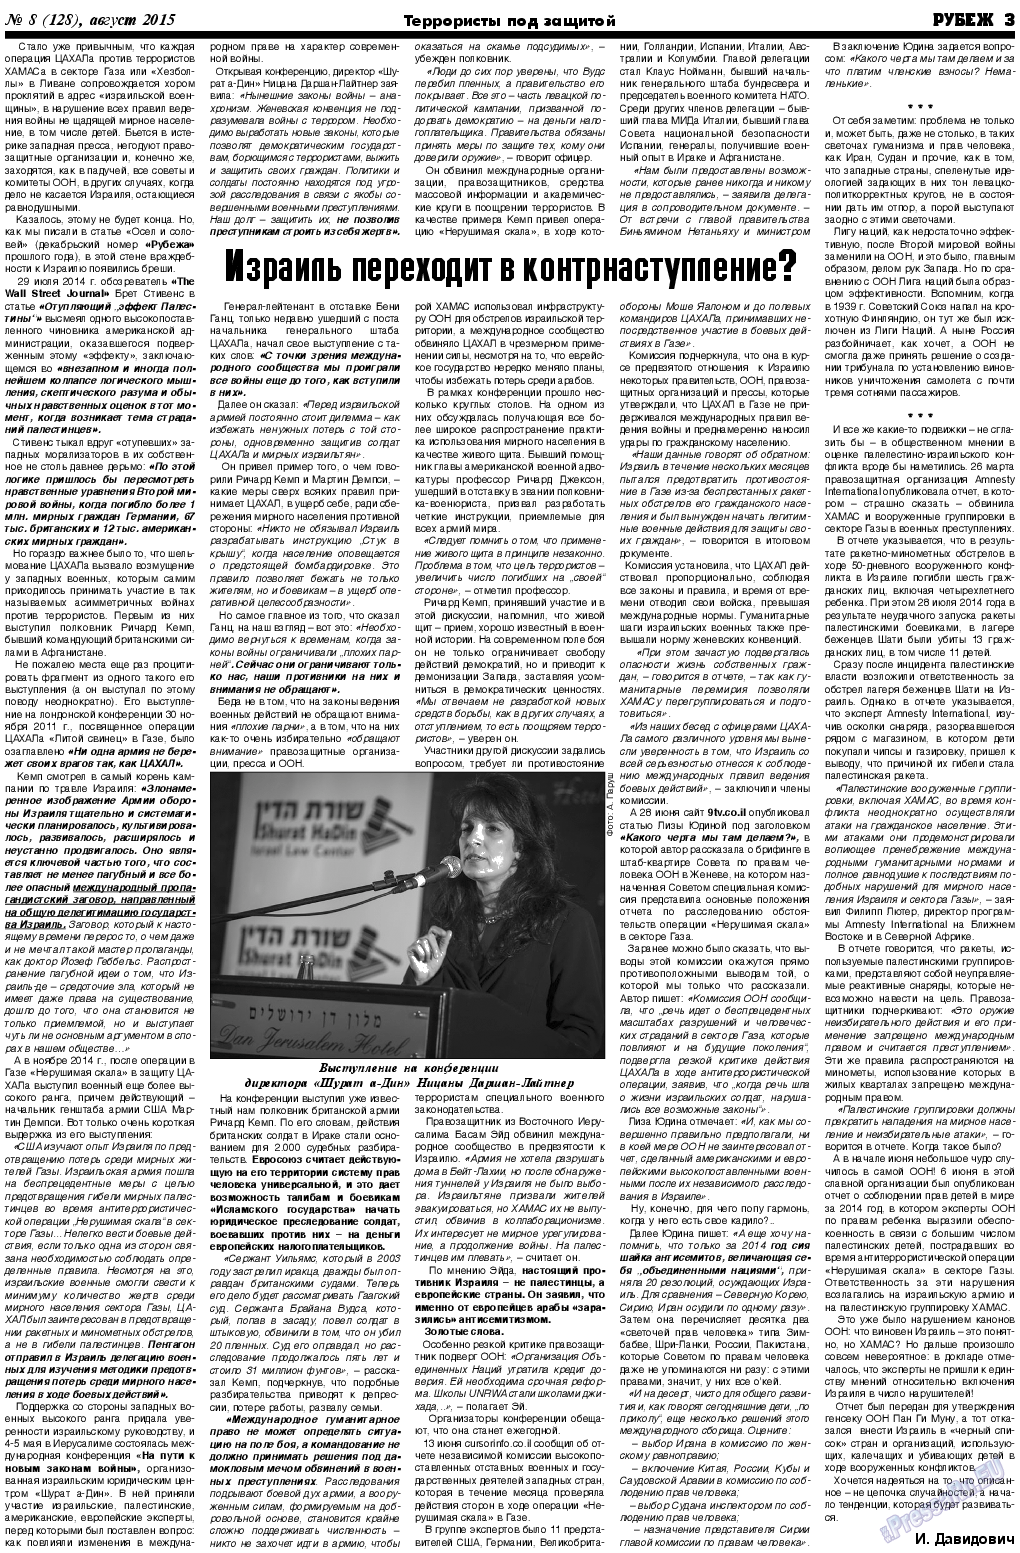 Рубеж, газета. 2015 №8 стр.3